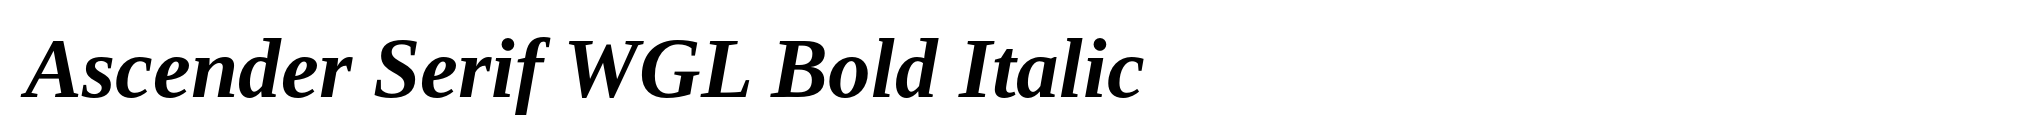 Ascender Serif WGL Bold Italic image